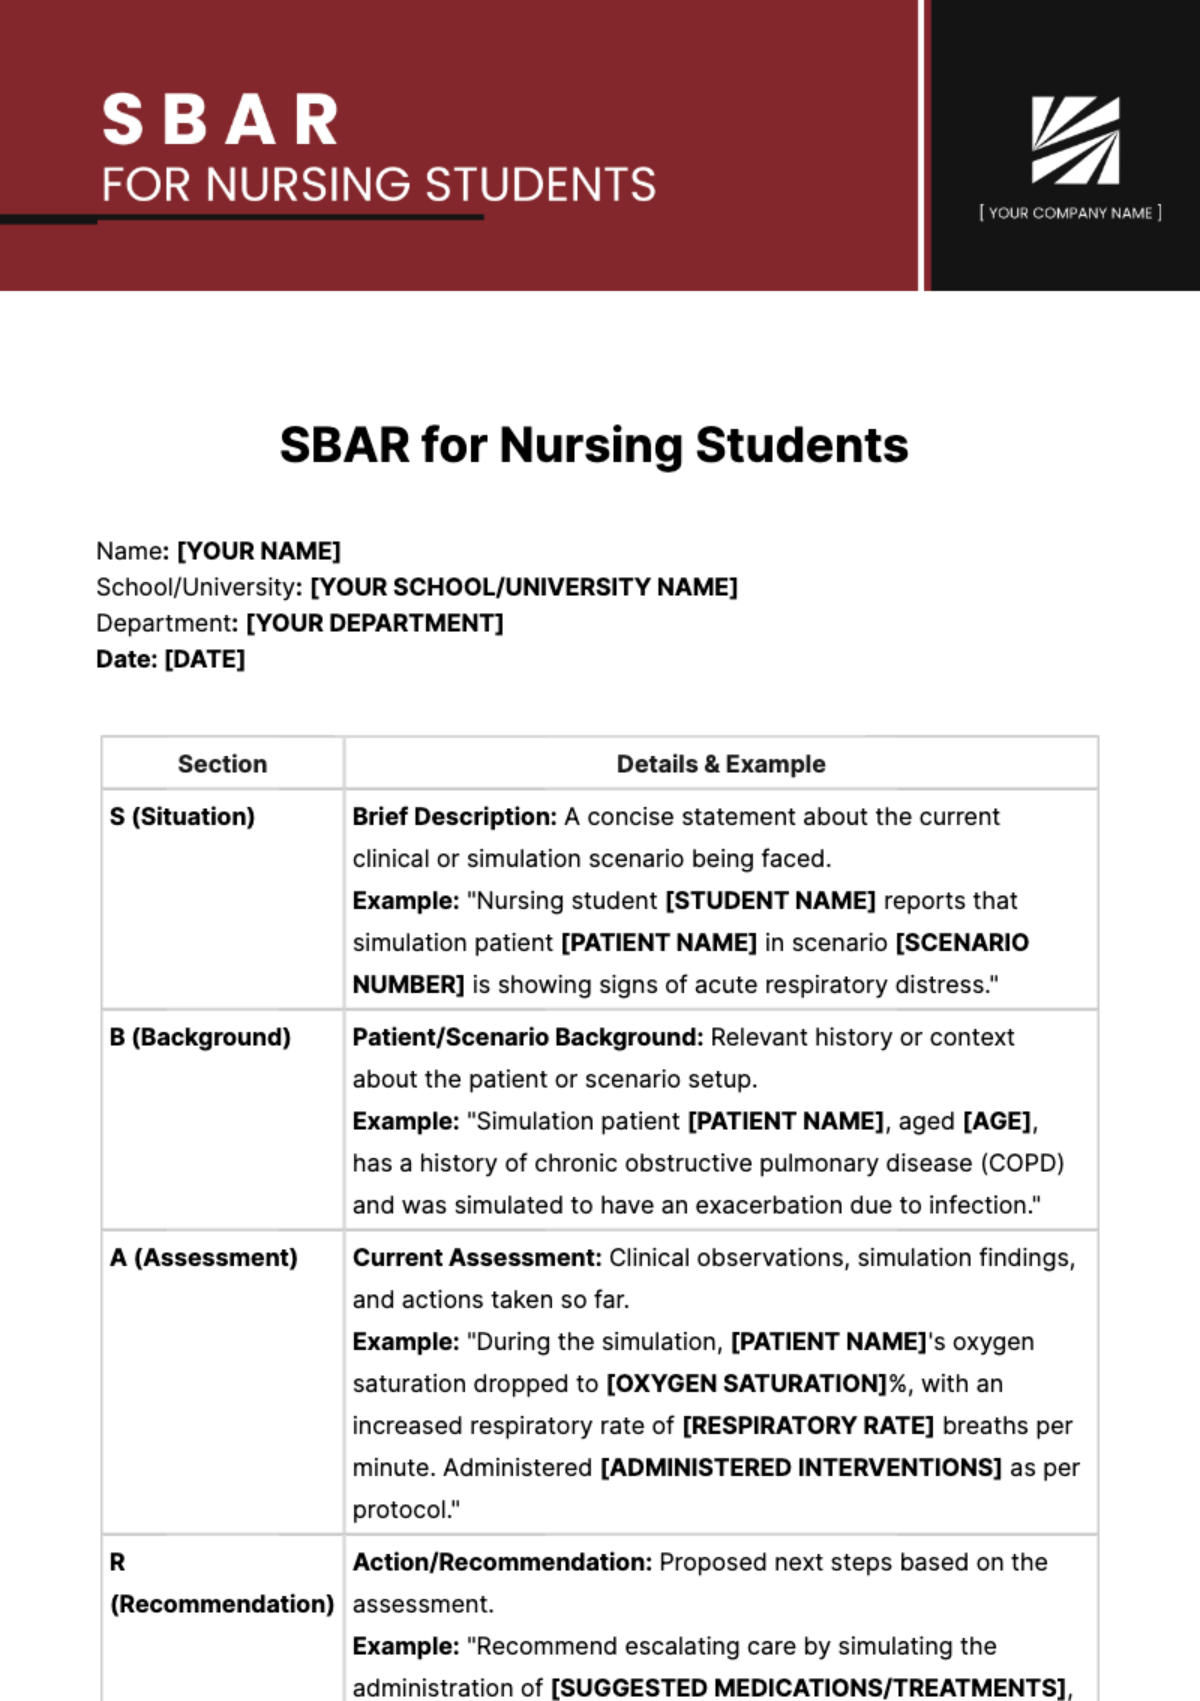 SBAR For Nursing Students Template